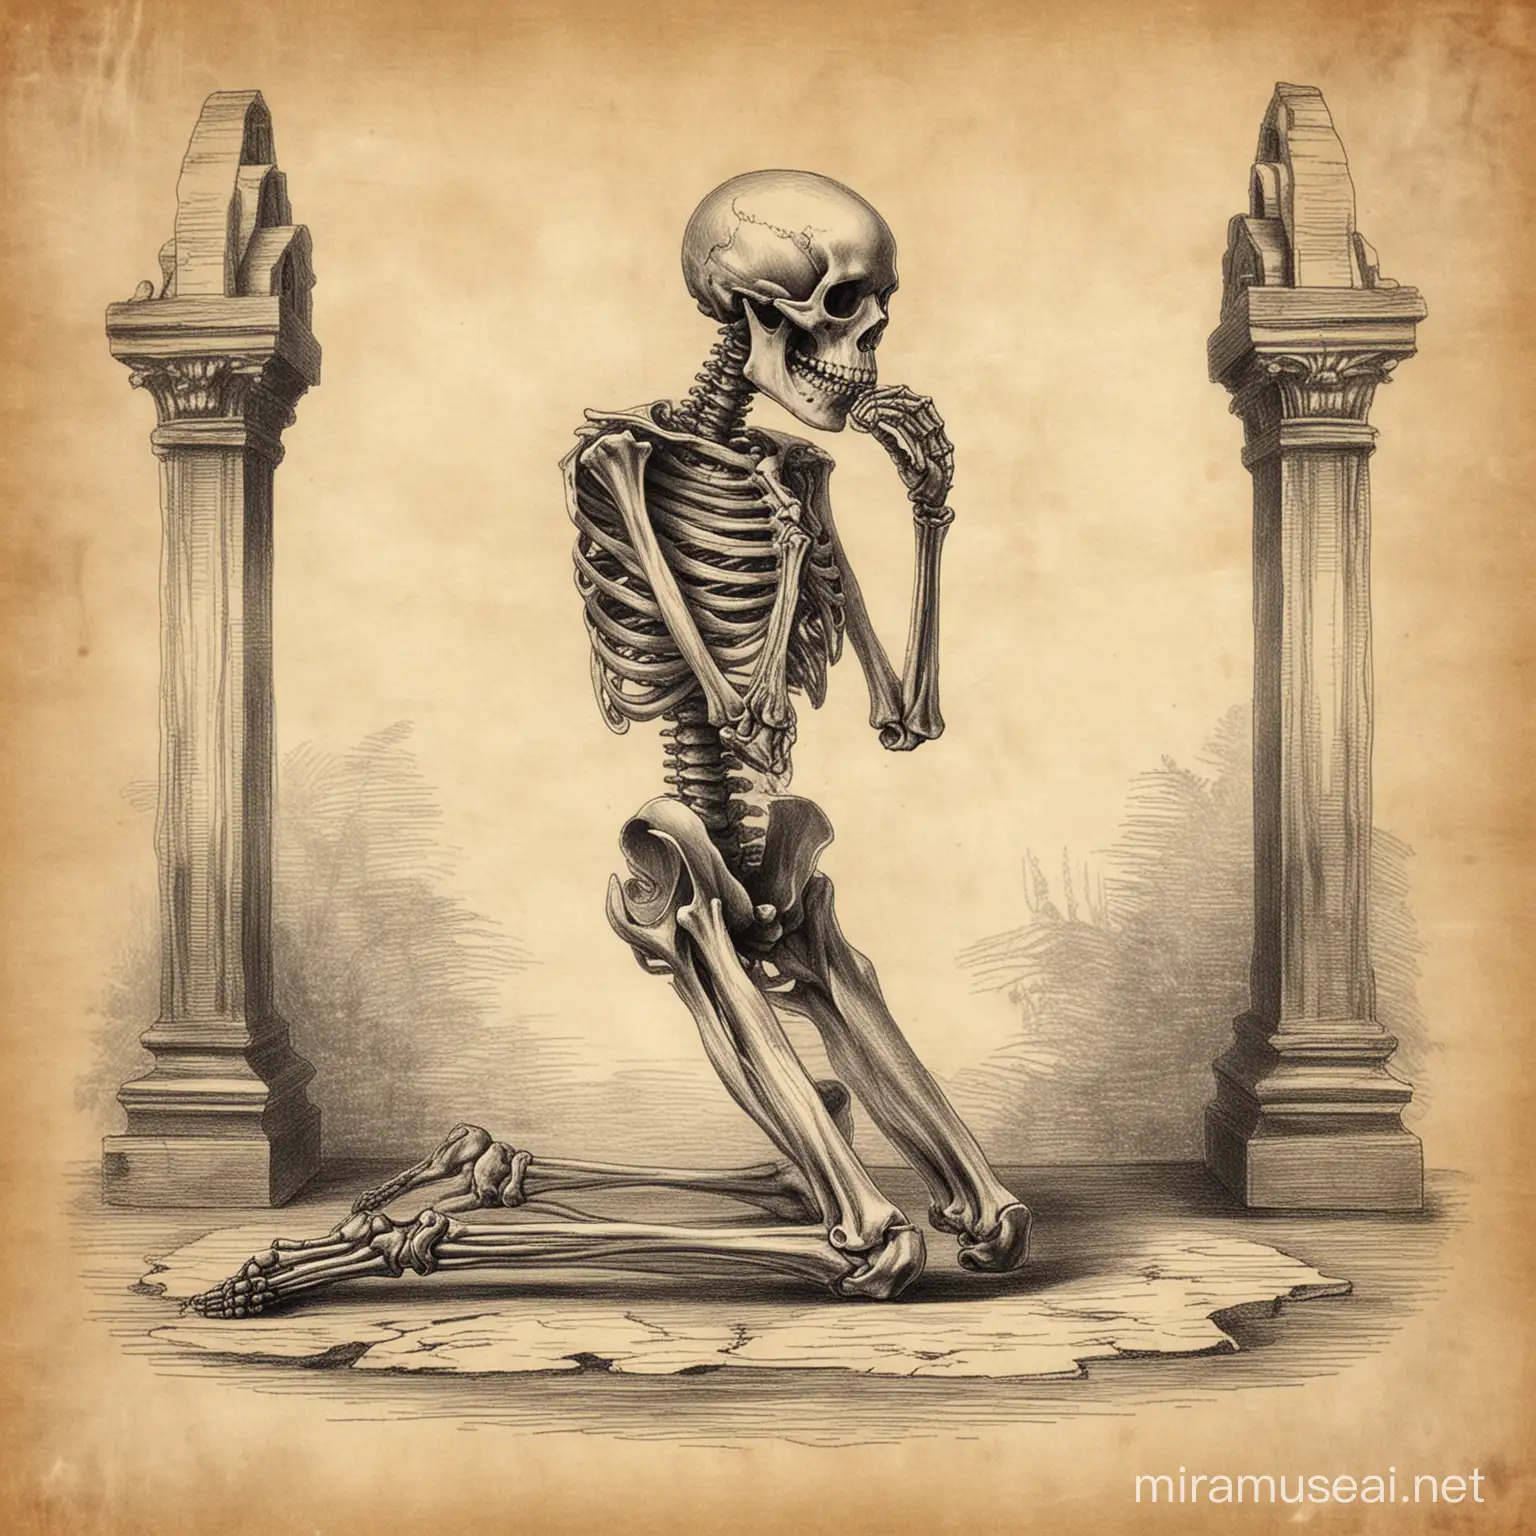 Vintage Sketch of a Skeleton Praying on Knees